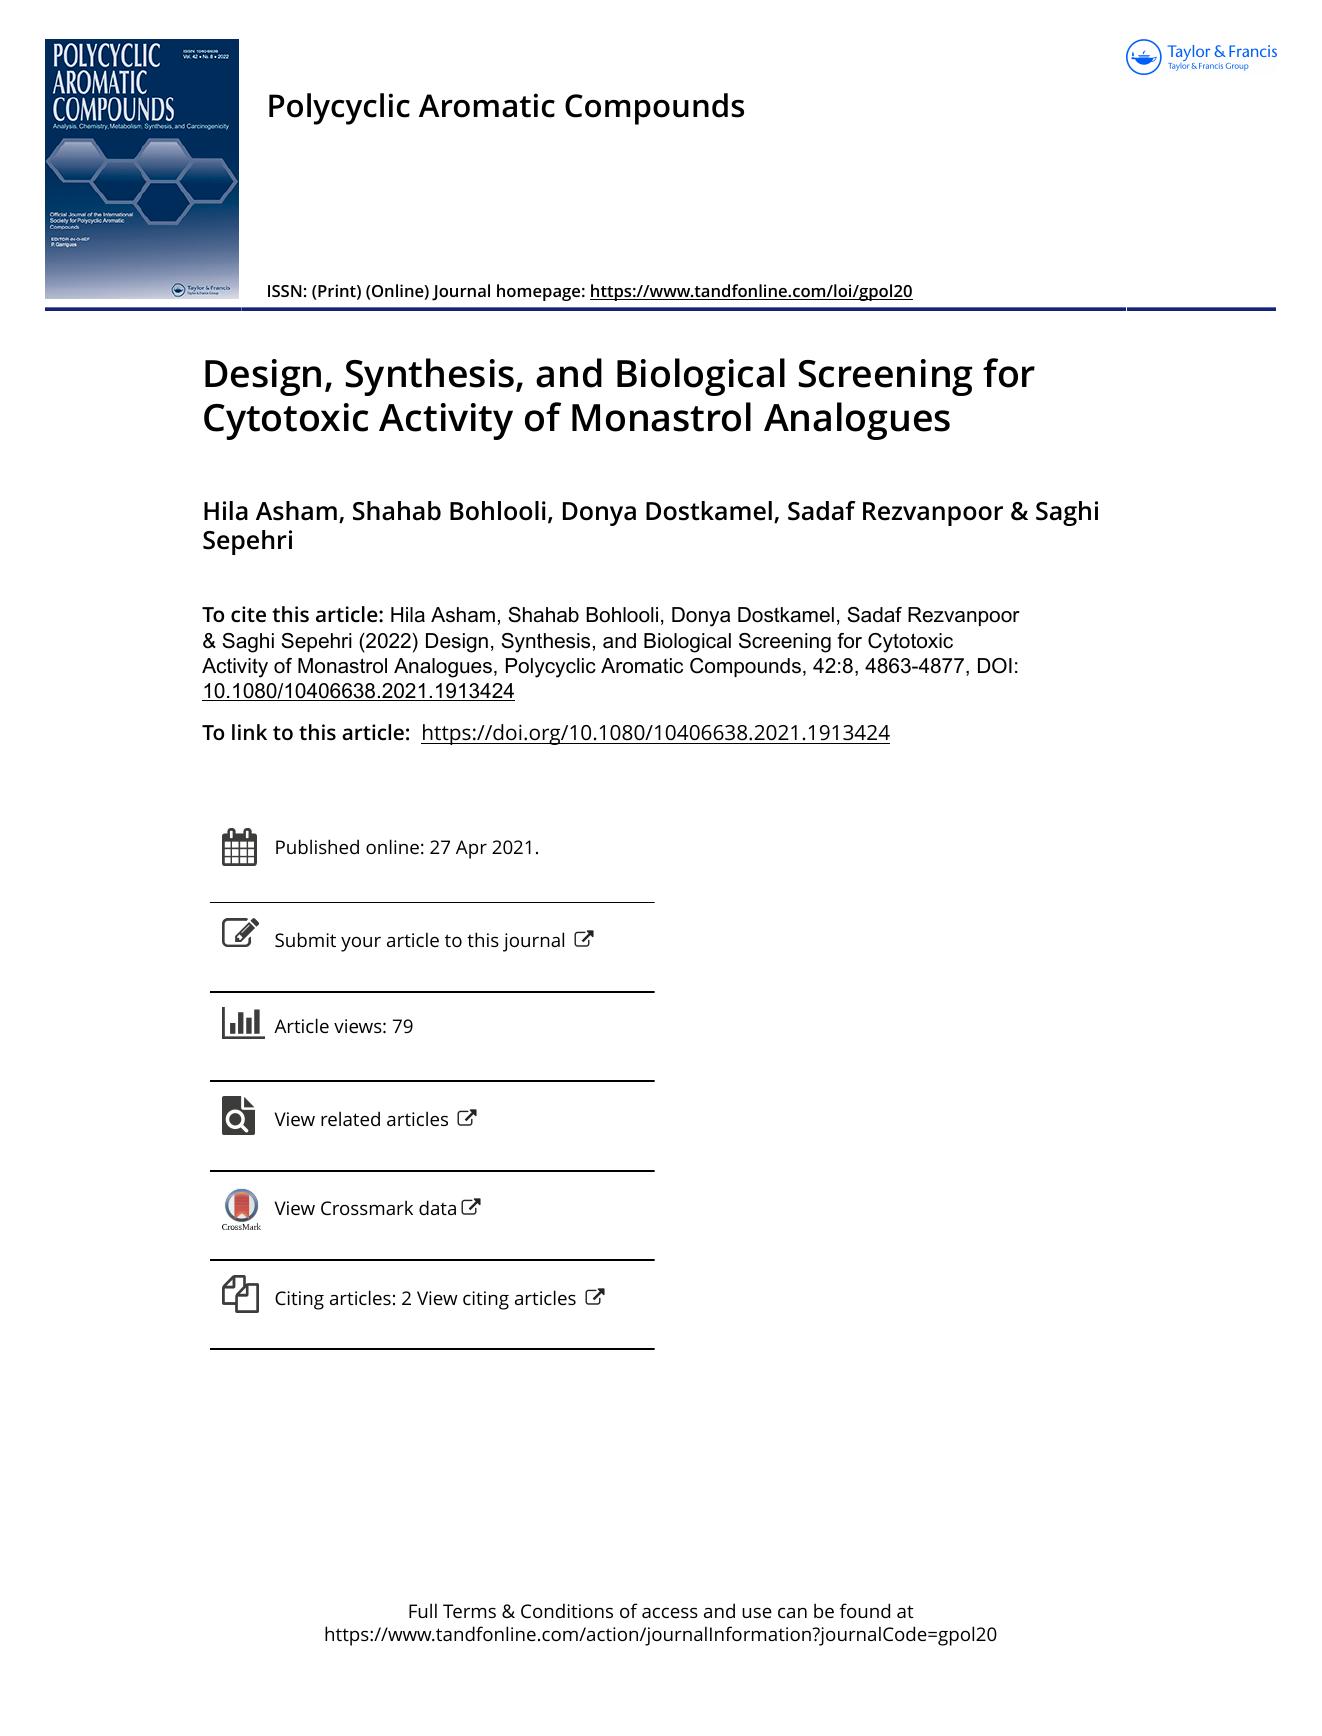 Design, Synthesis, and Biological Screening for Cytotoxic Activity of Monastrol Analogues by Asham Hila & Bohlooli Shahab & Dostkamel Donya & Rezvanpoor Sadaf & Sepehri Saghi